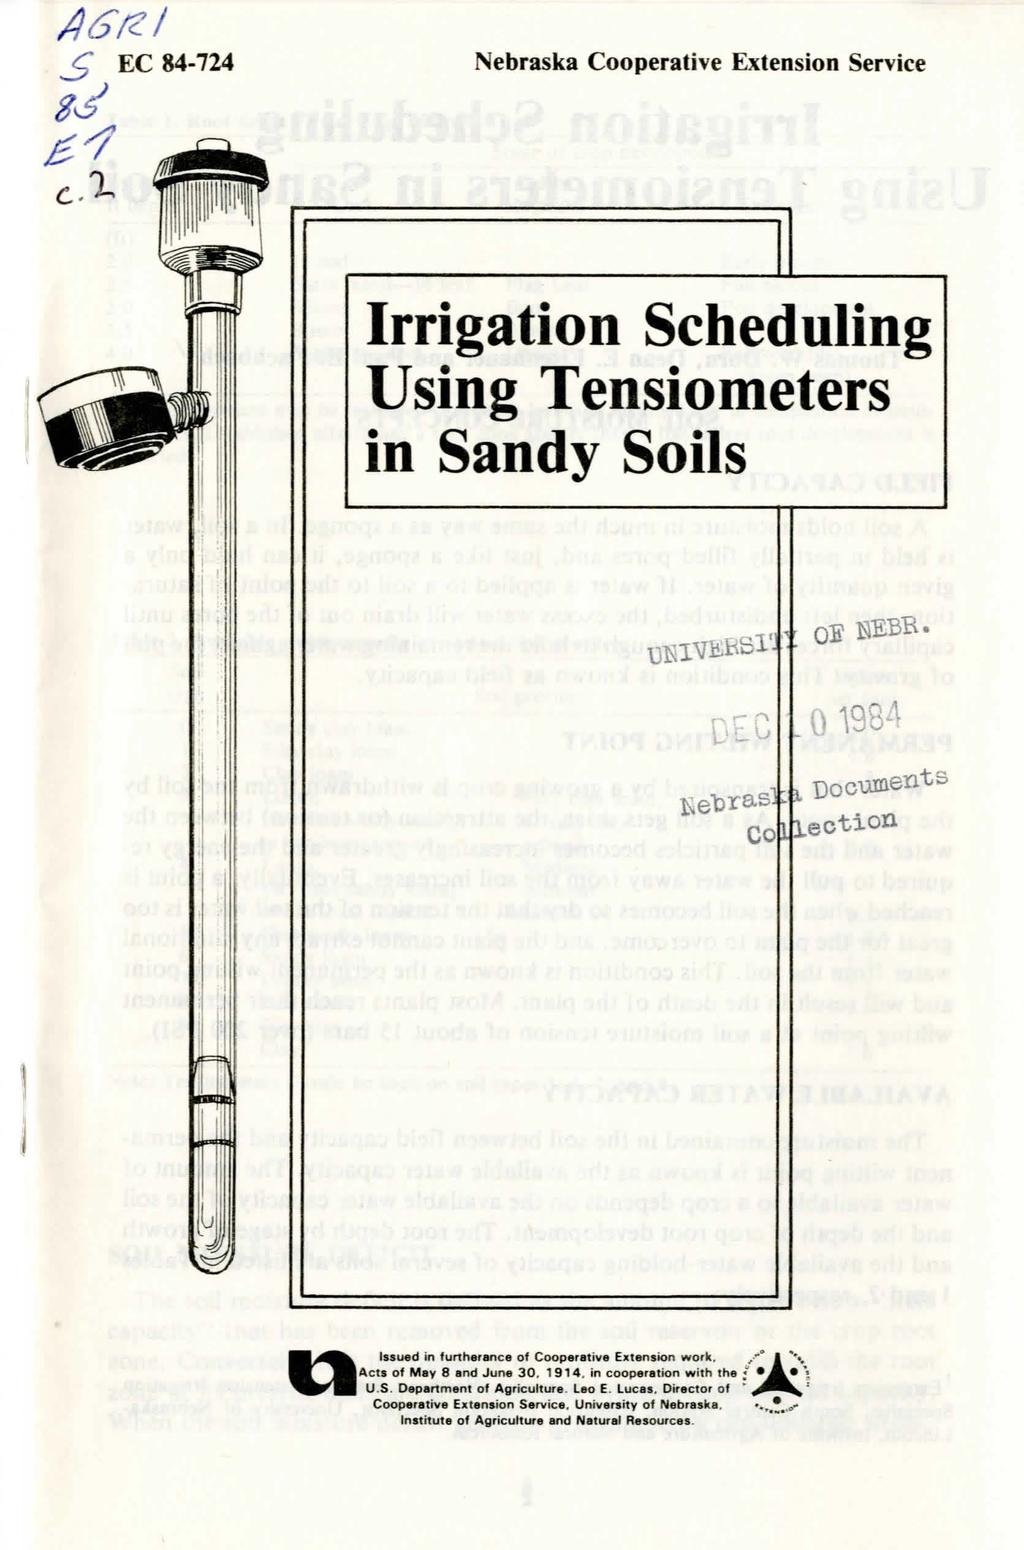 /l6rc 1 _5 EC 84-724 3~ ~ c.. 'l Nebraska Cooperative Extension Service I Irrigation Scheduling Using Tensiometers in Sandy Soils UNIVI!.BSI'. of NEBR. Q[C - '\9-1 Documents Neoras co l.